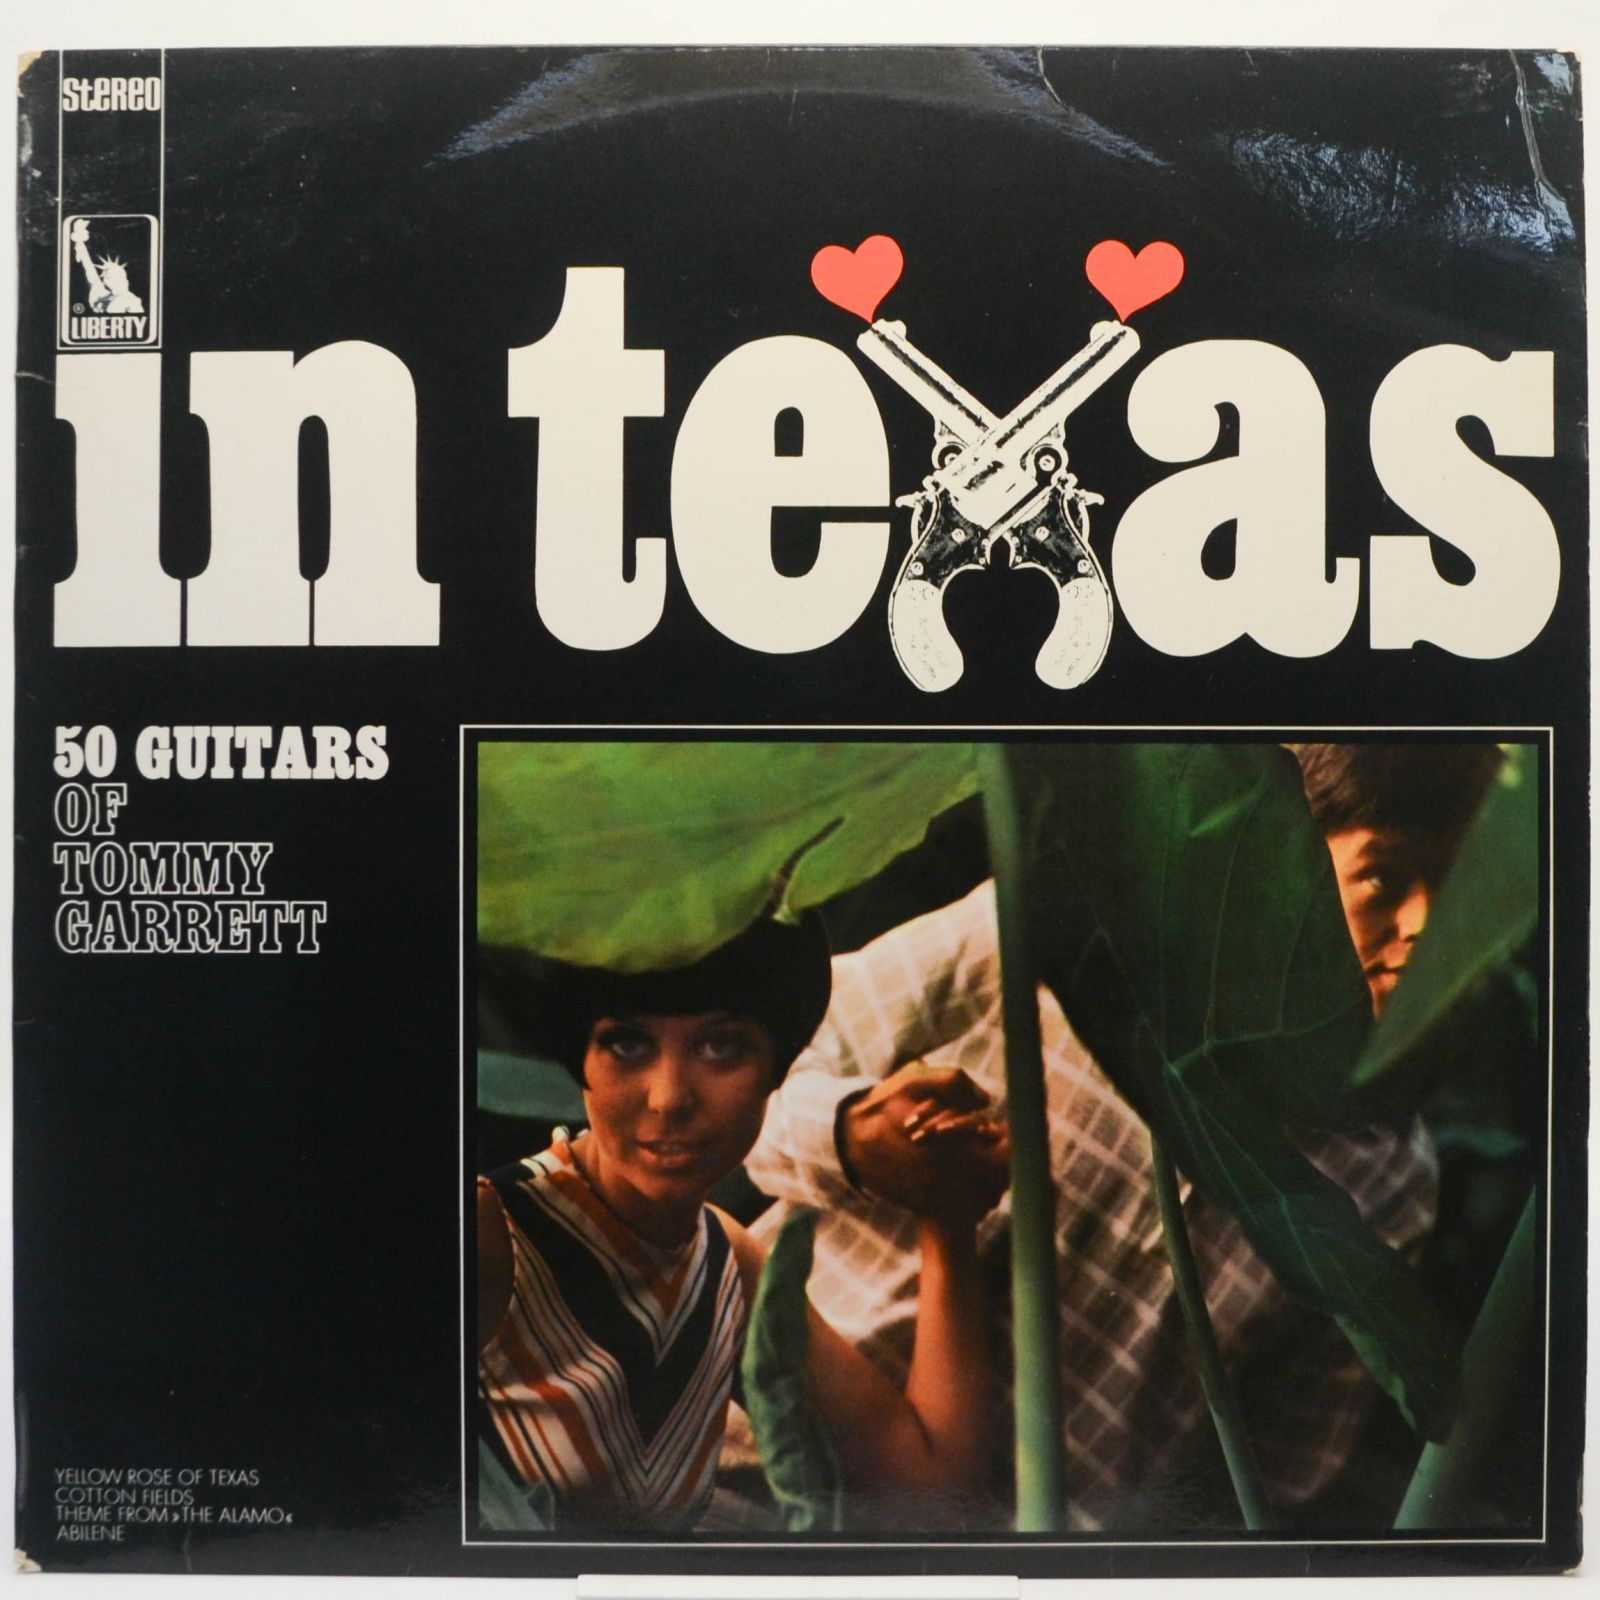 50 Guitars Of Tommy Garrett — In Texas, 1967